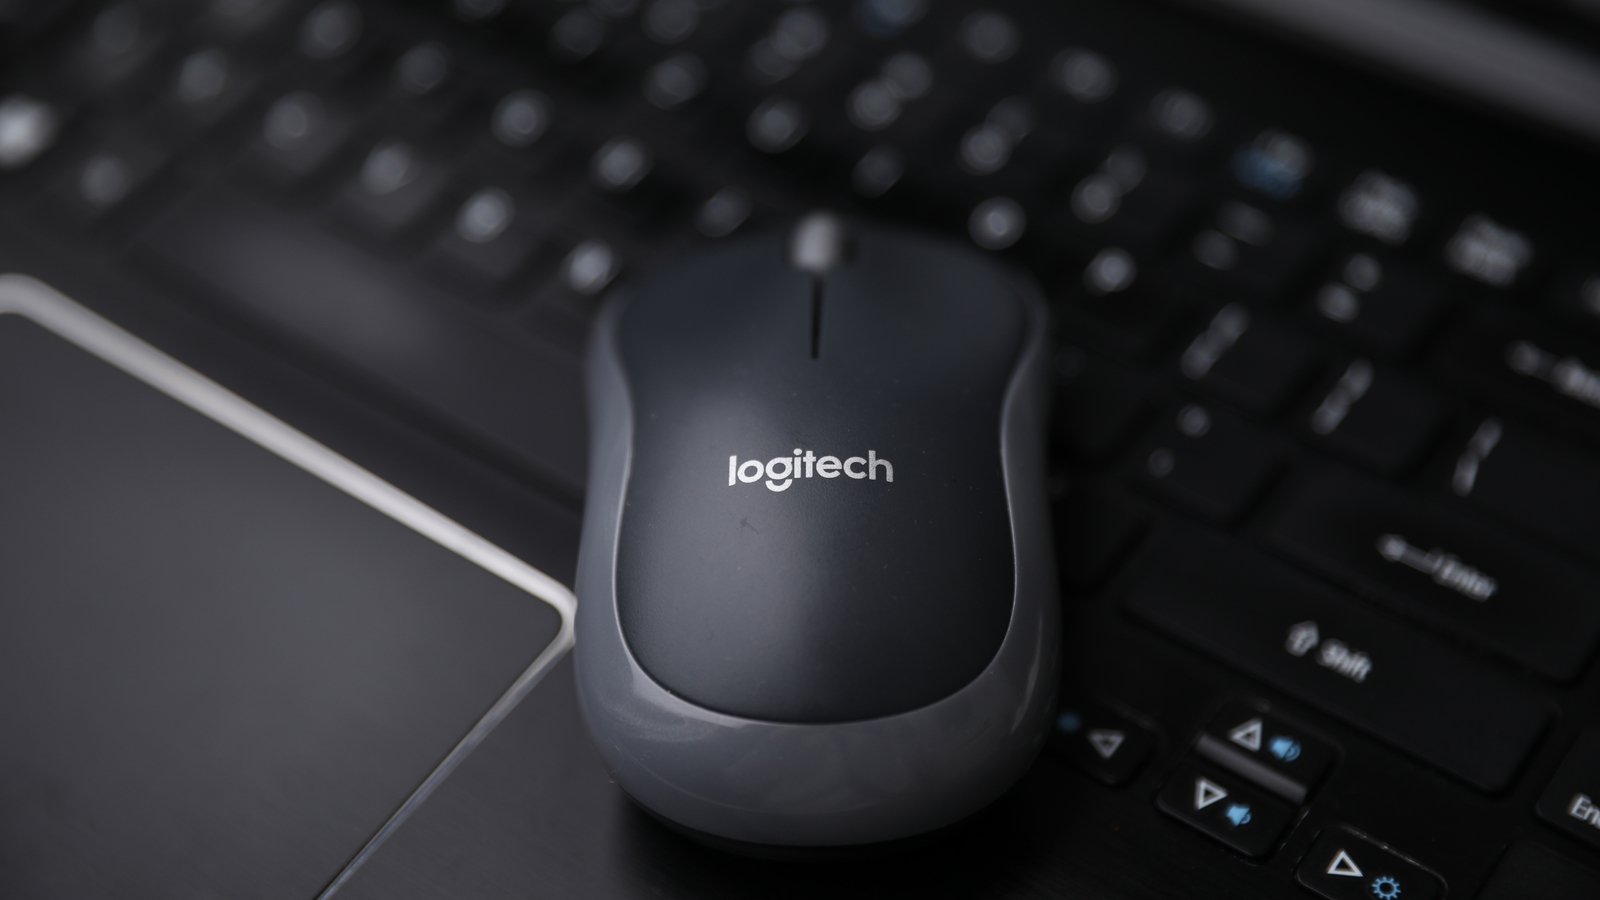 Logitech's sales 12%, to depart